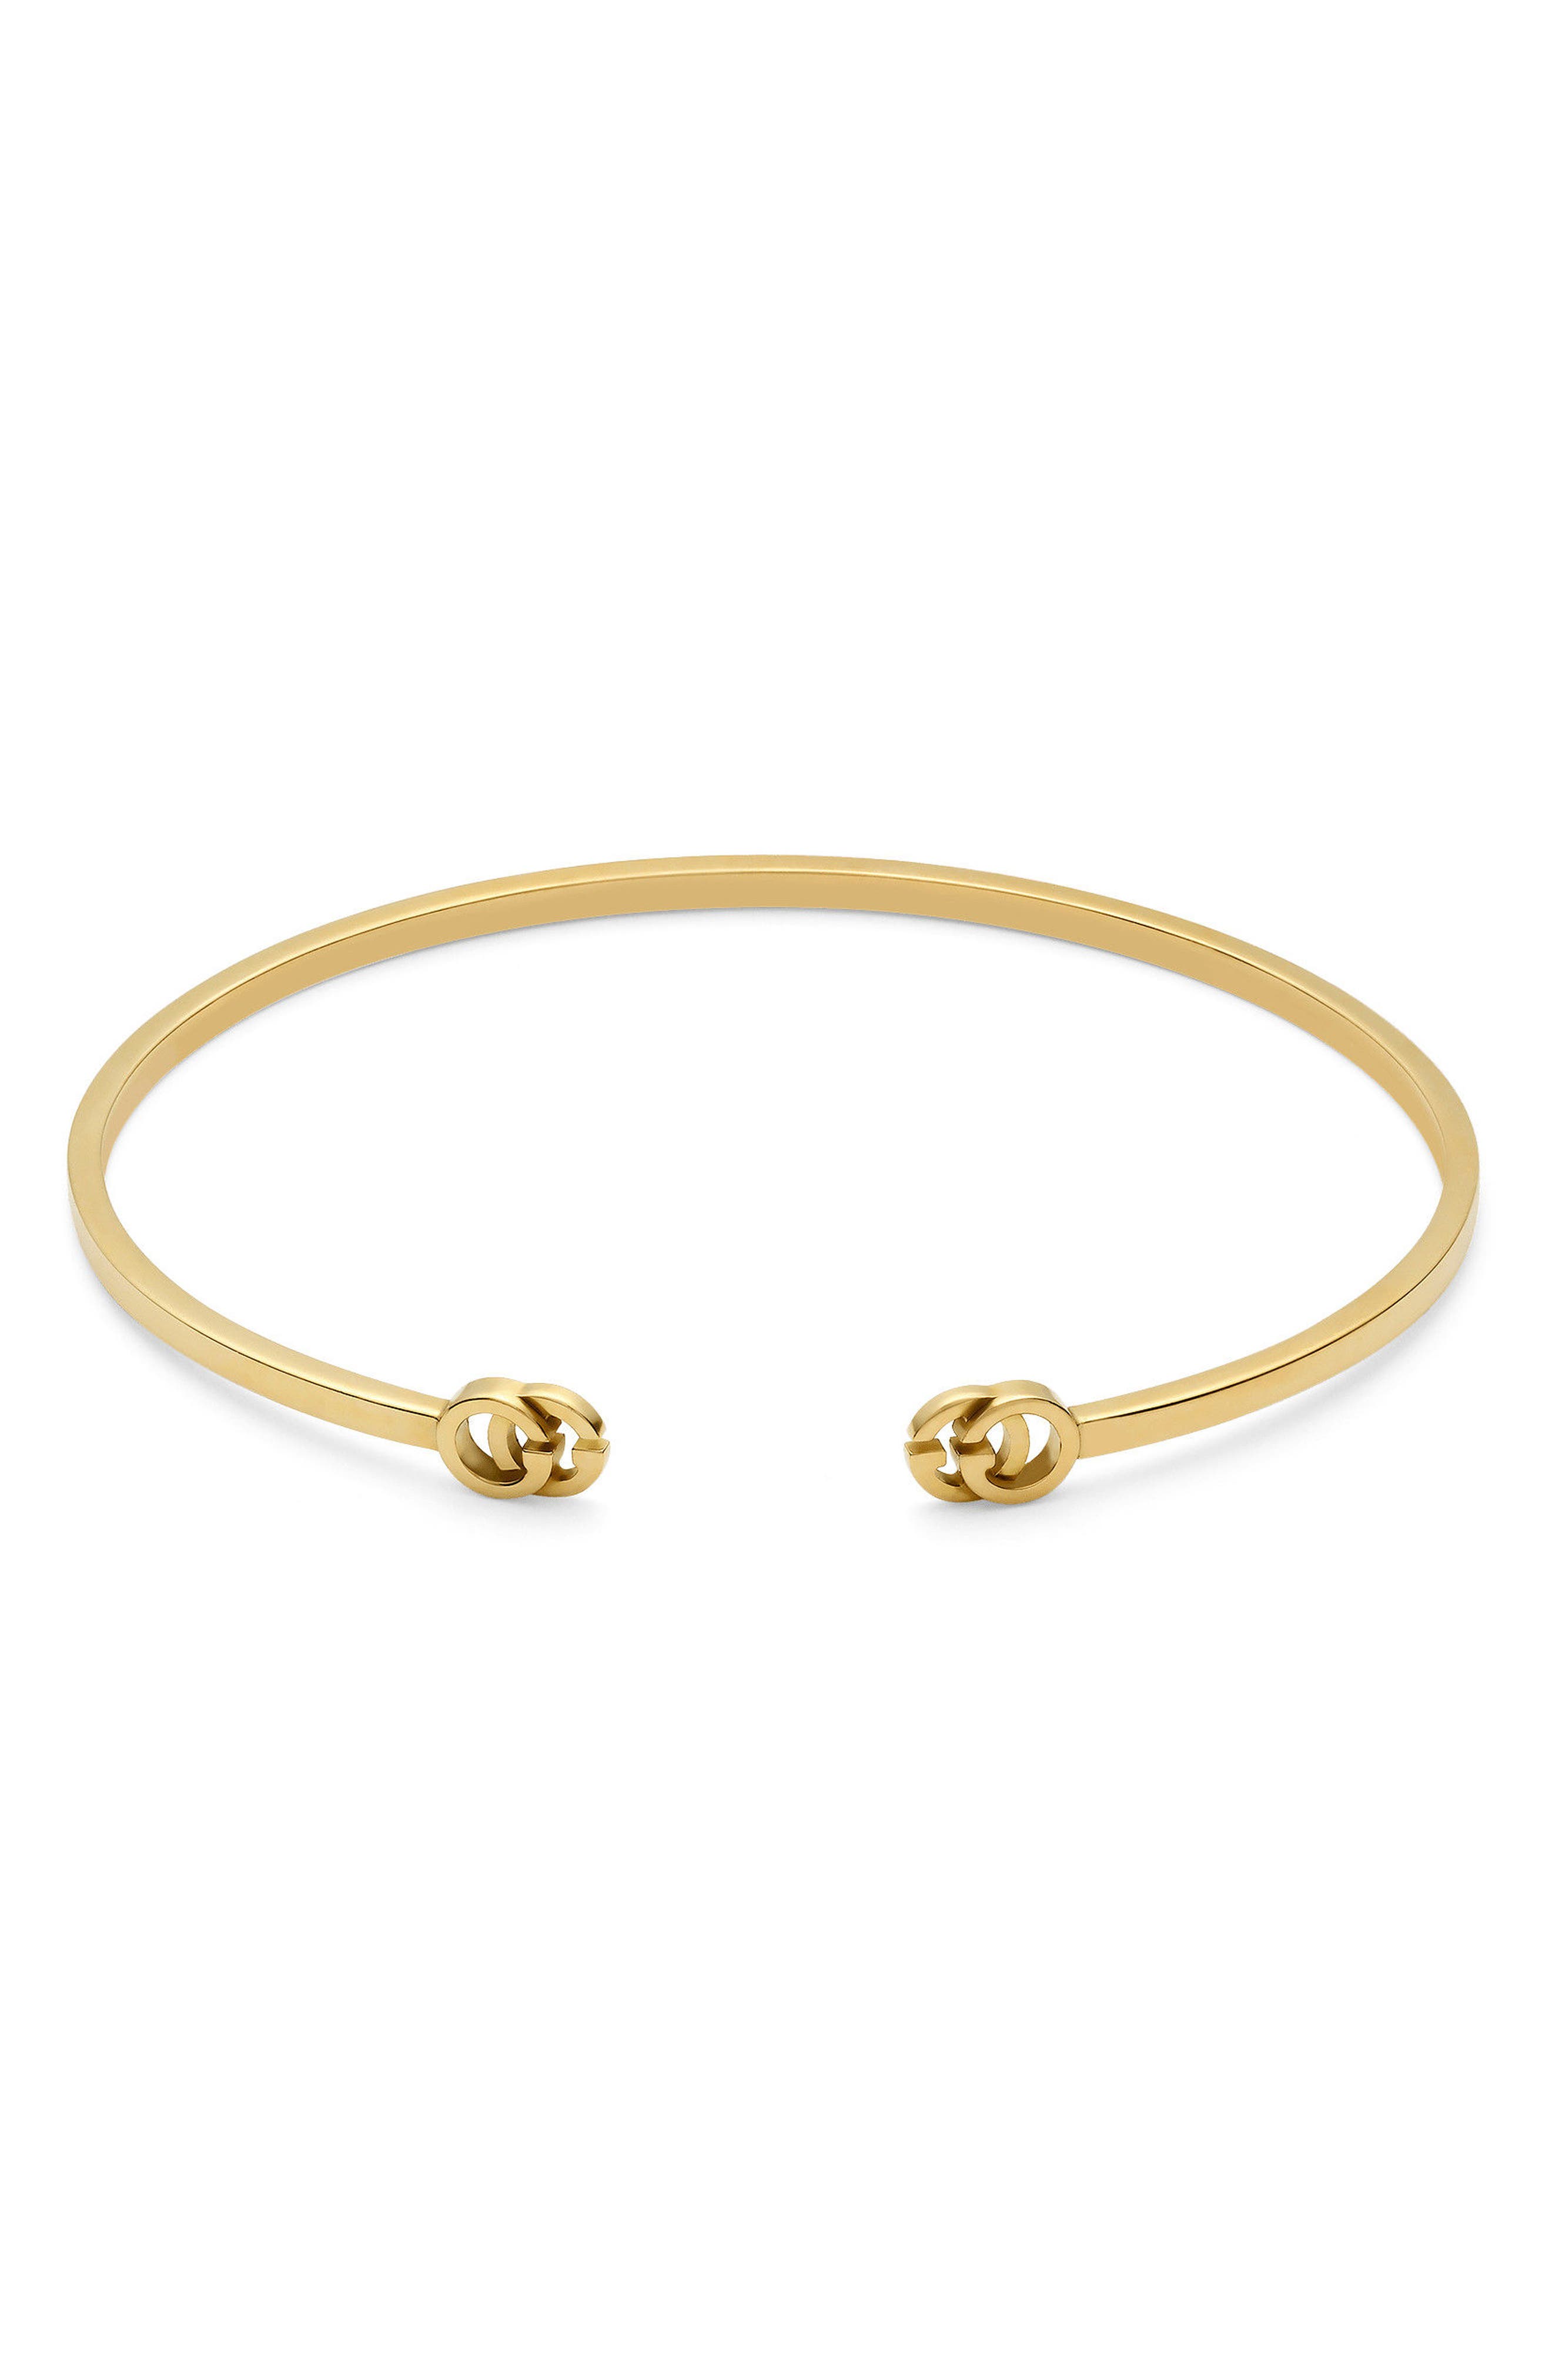 gucci bracelet gold womens